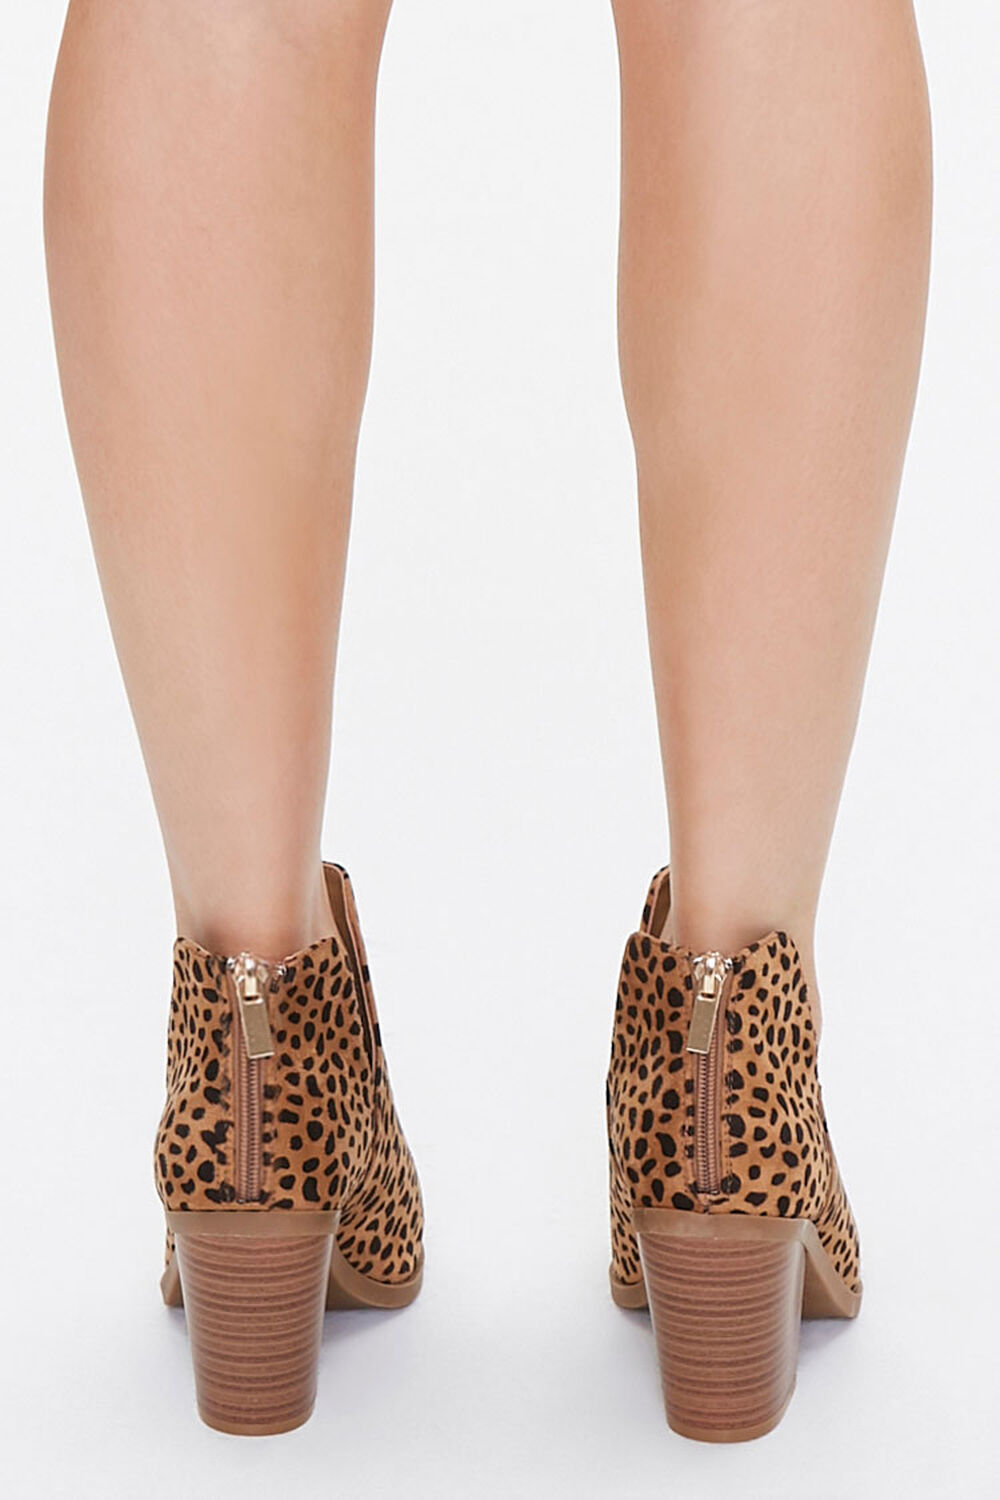 Cheetah Print Block Heel Booties, image 3